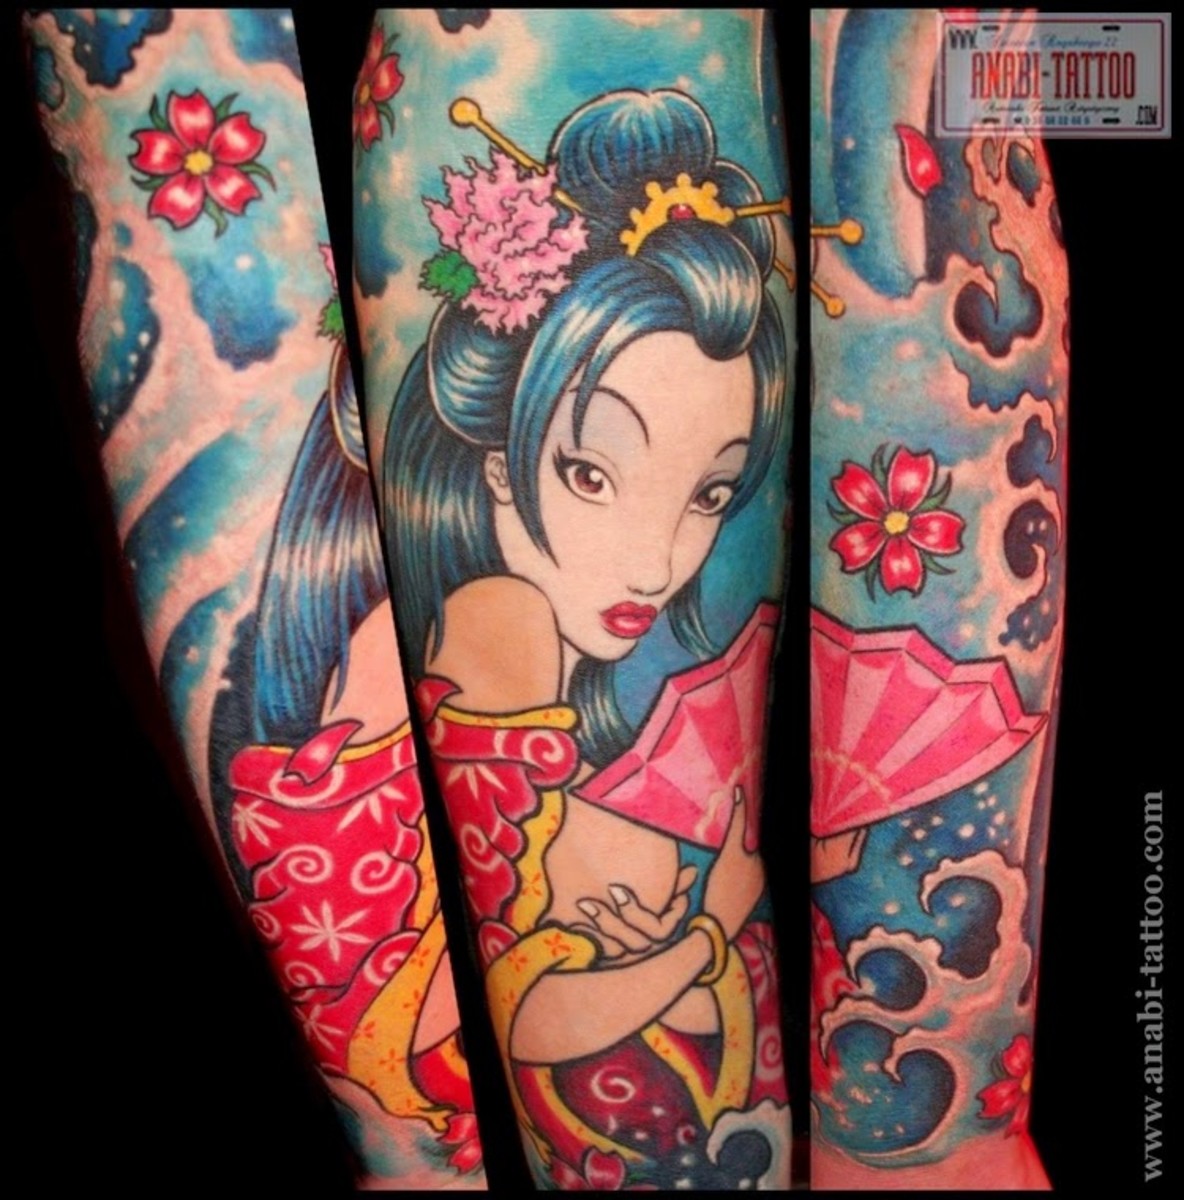 An intricate geisha tattoo.